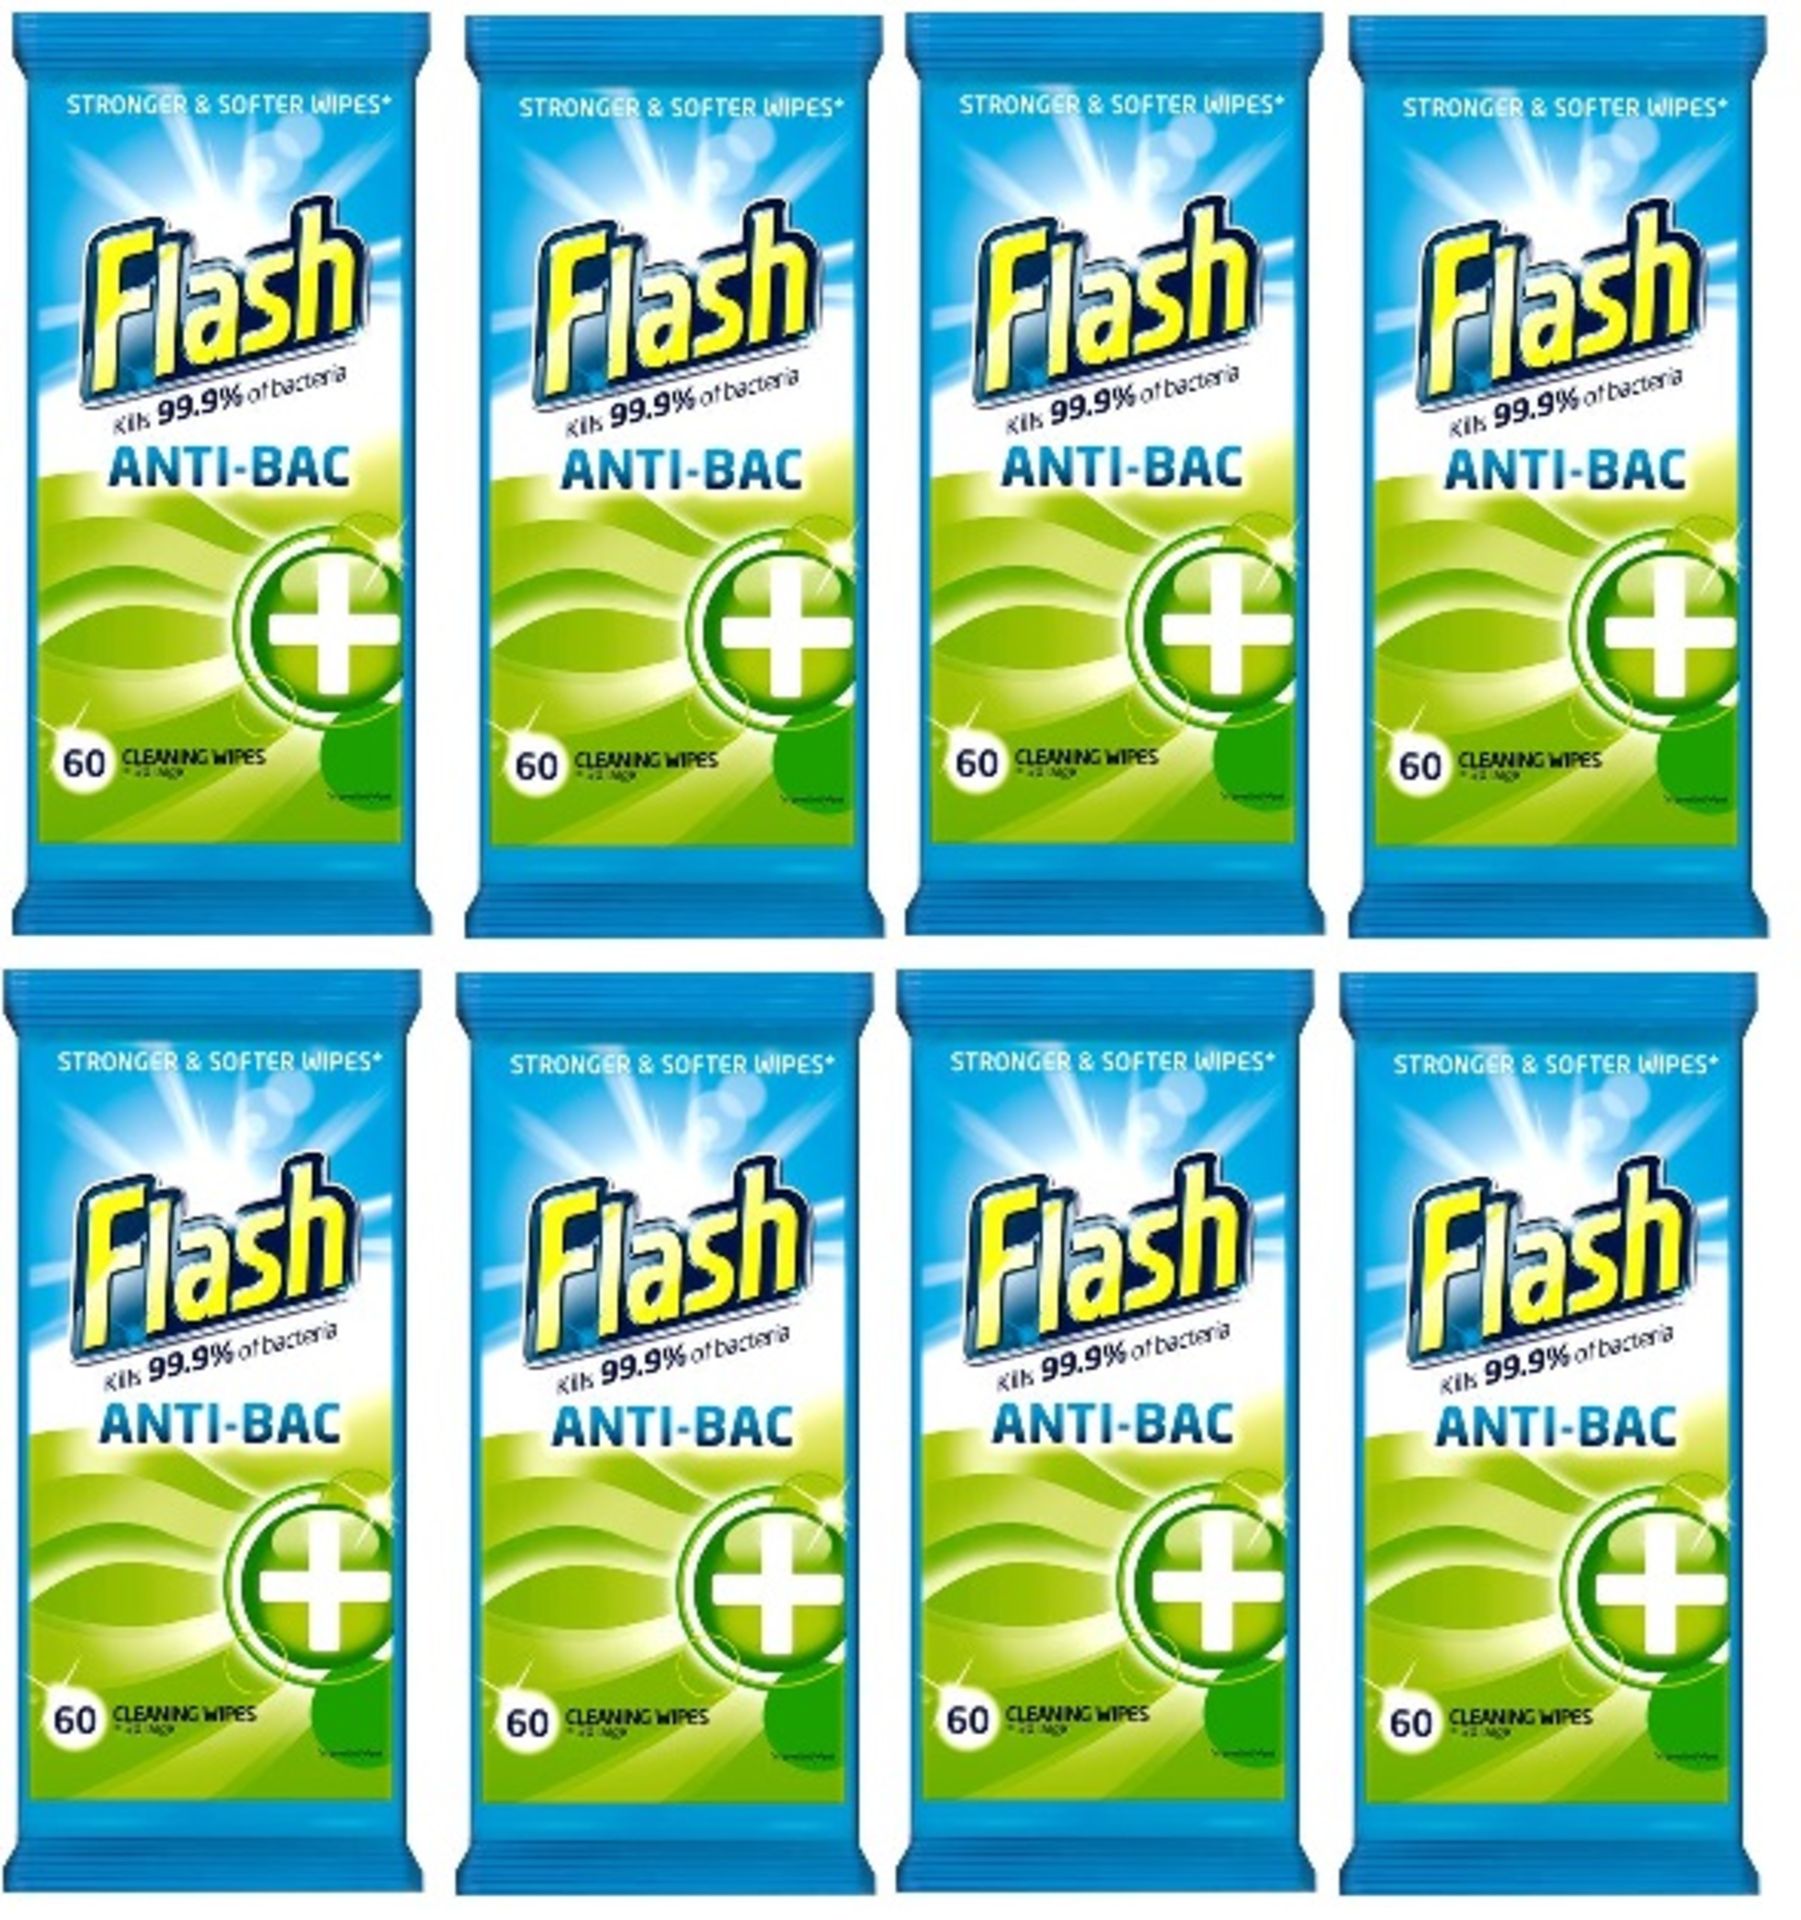 V Brand New Pack Of 8 Flash Anti-Bac Plus Wipes (x60 wipes) Sainsbury Price £16.00 Total